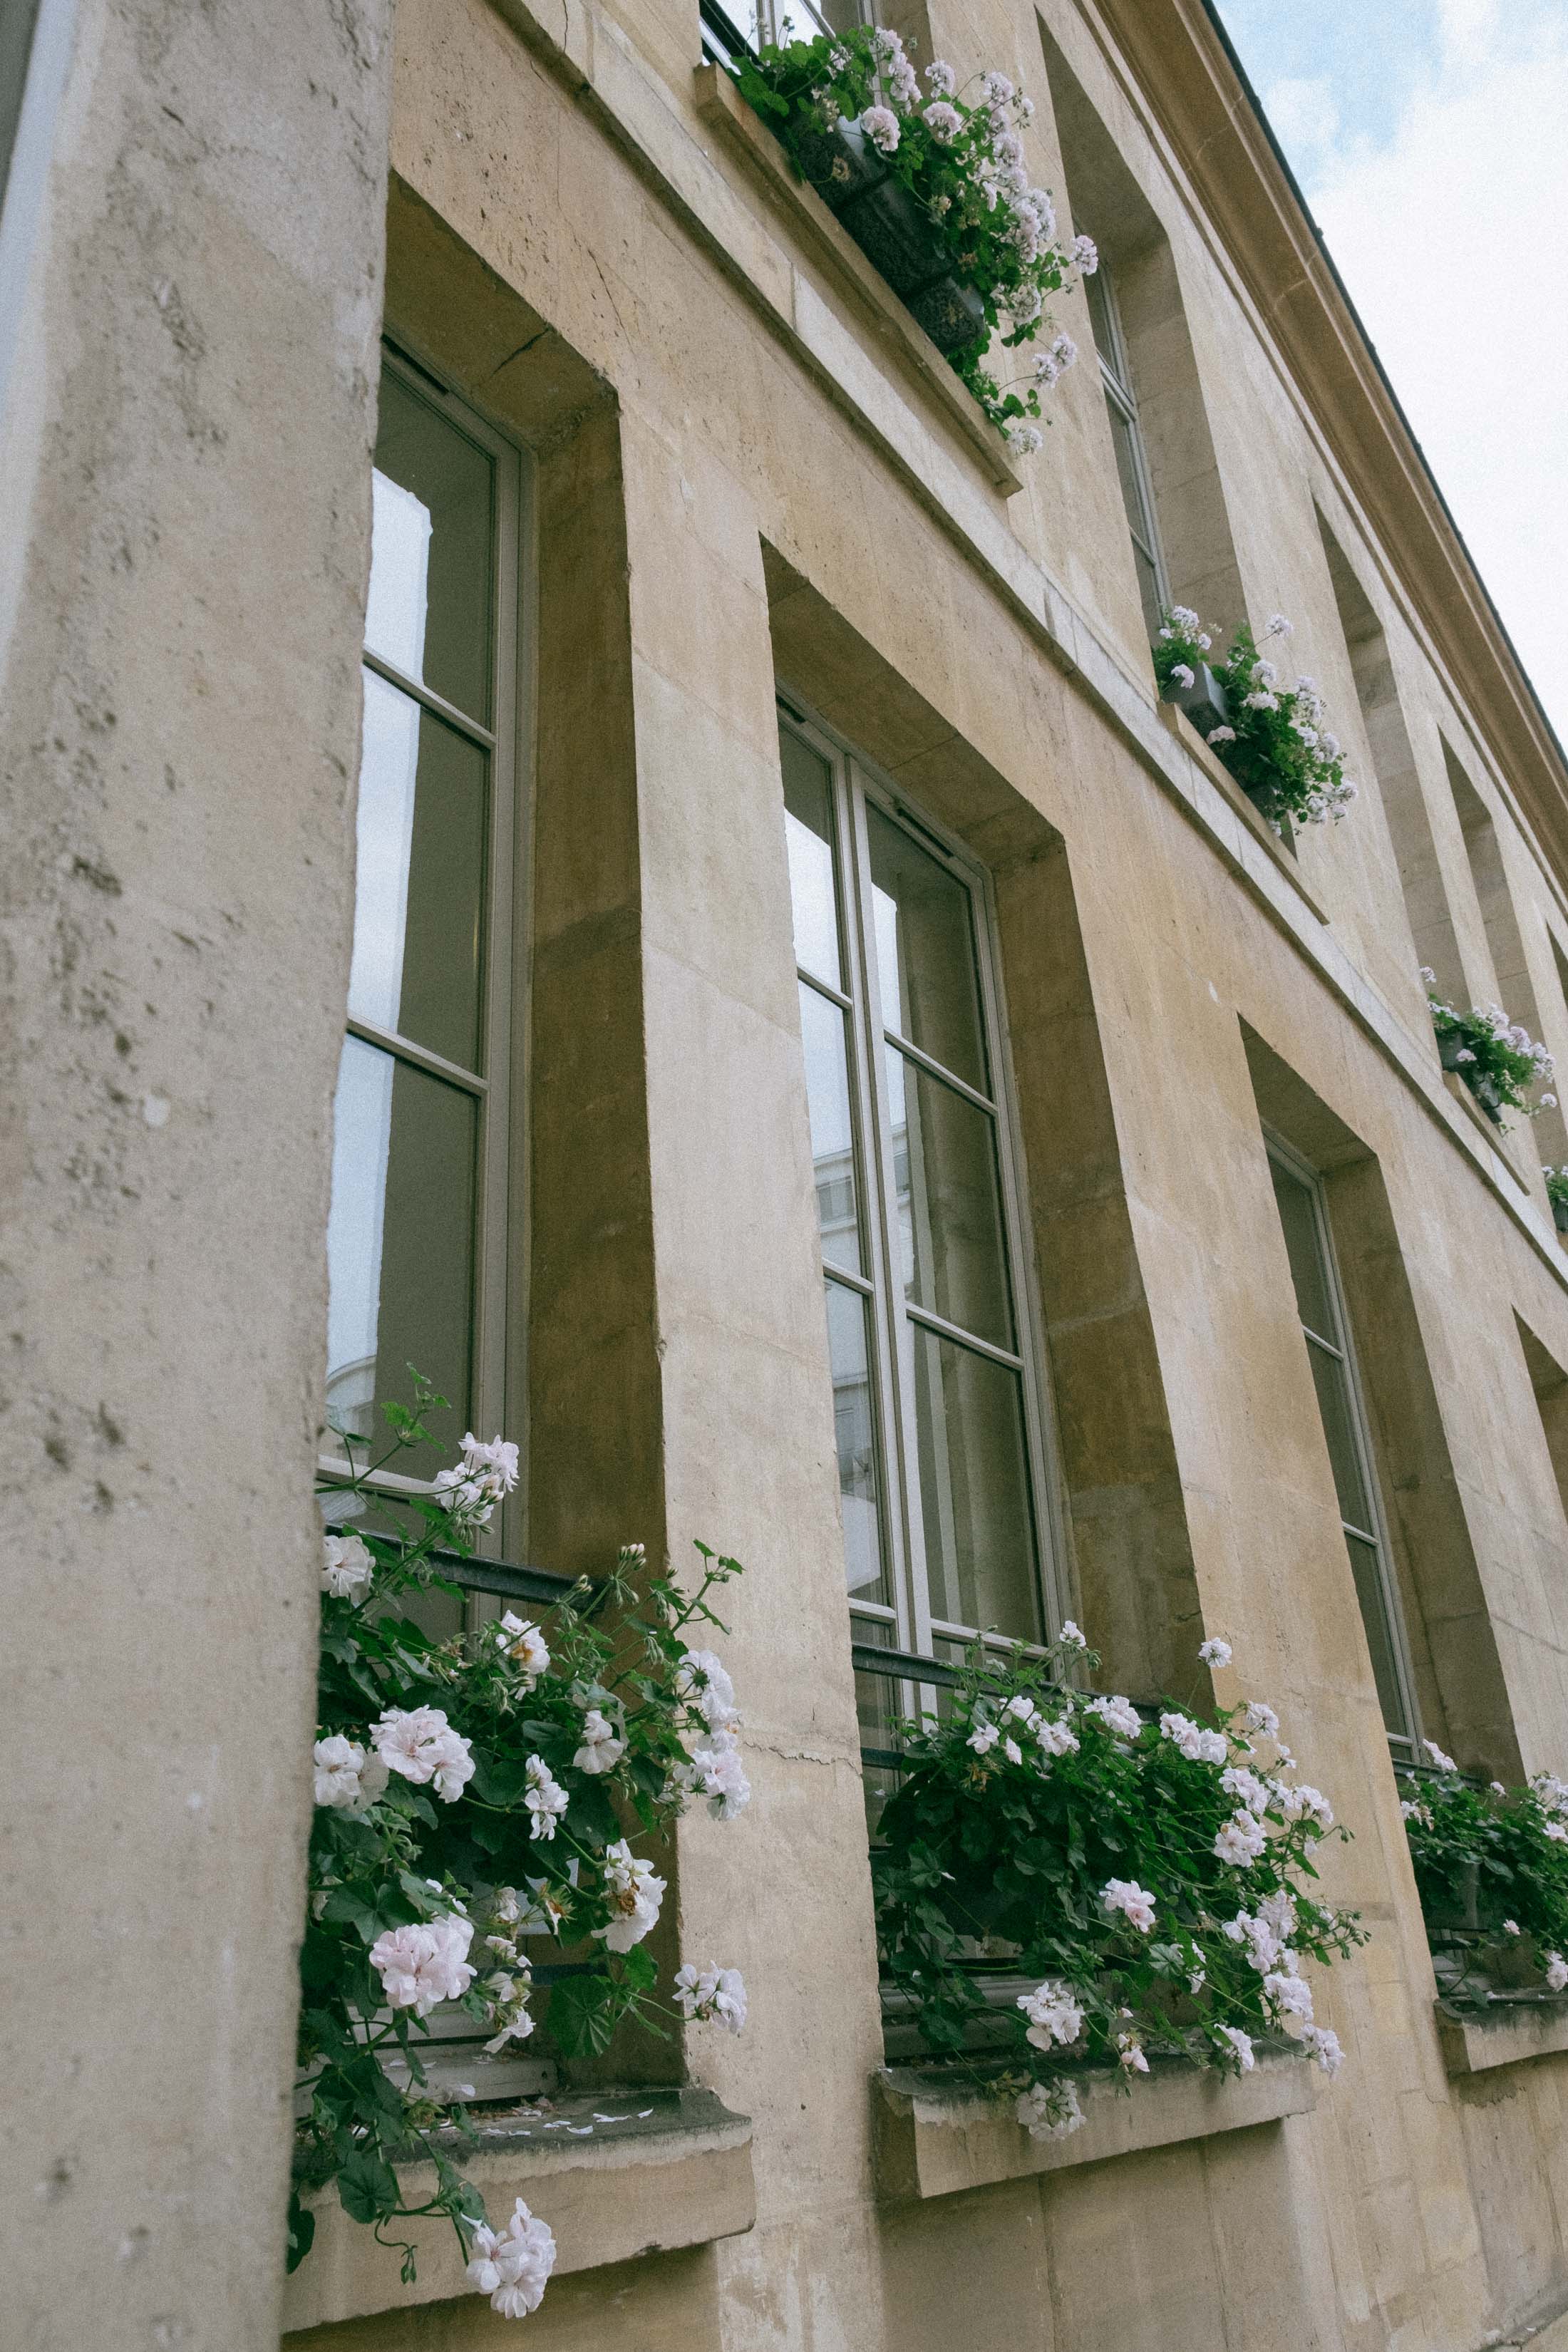 Parisian windows with flowers